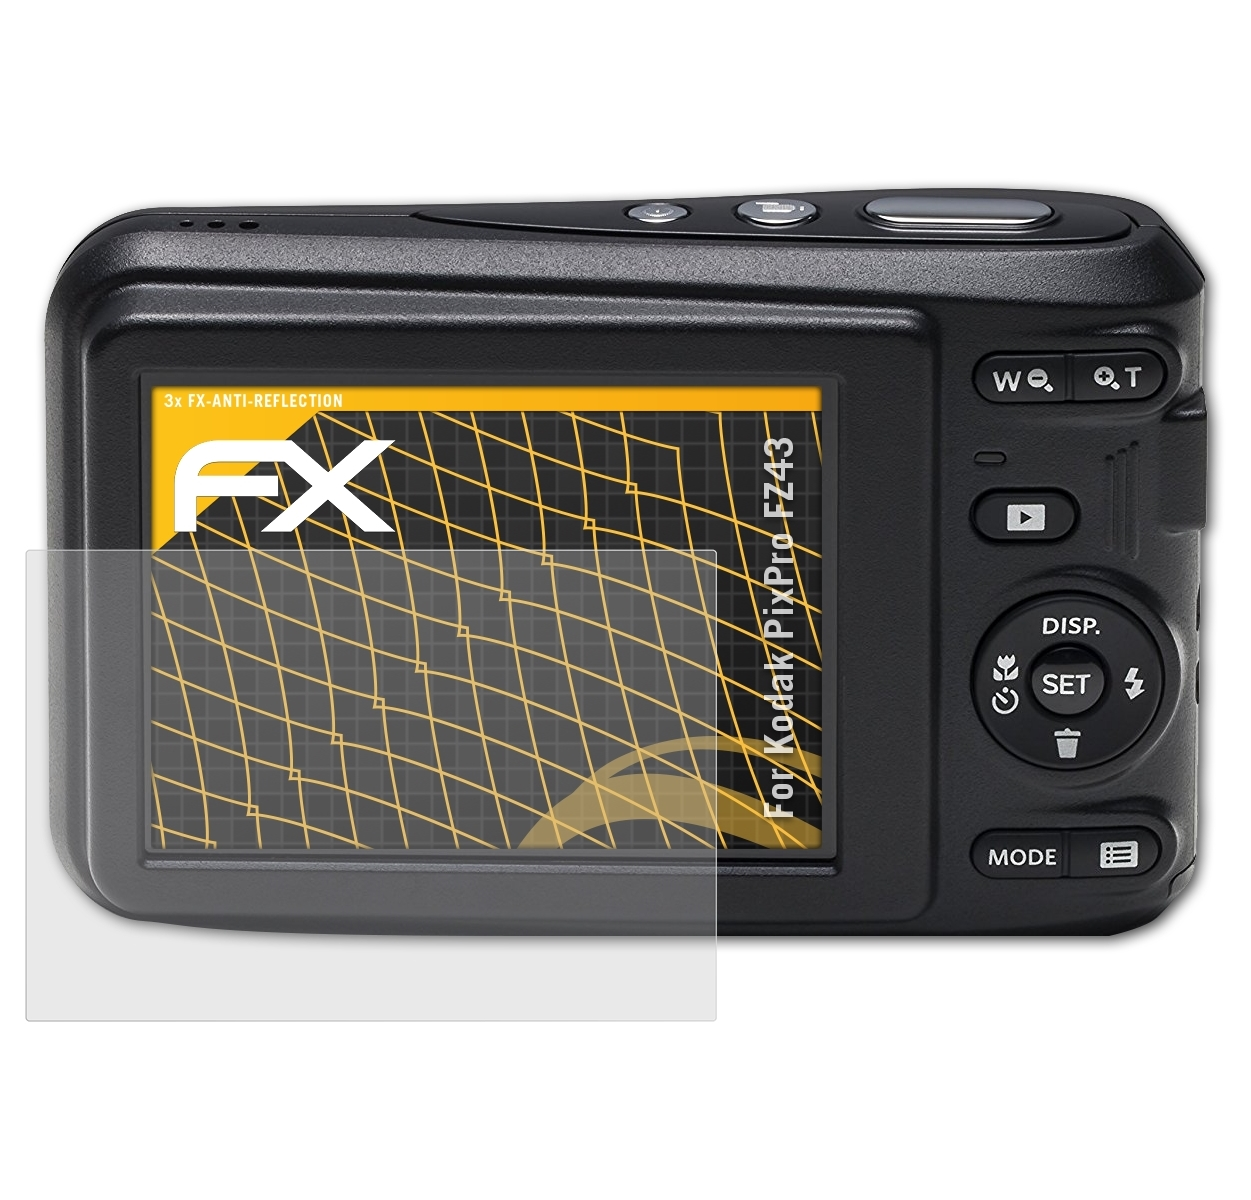 3x ATFOLIX Kodak Displayschutz(für FX-Antireflex FZ43) PixPro